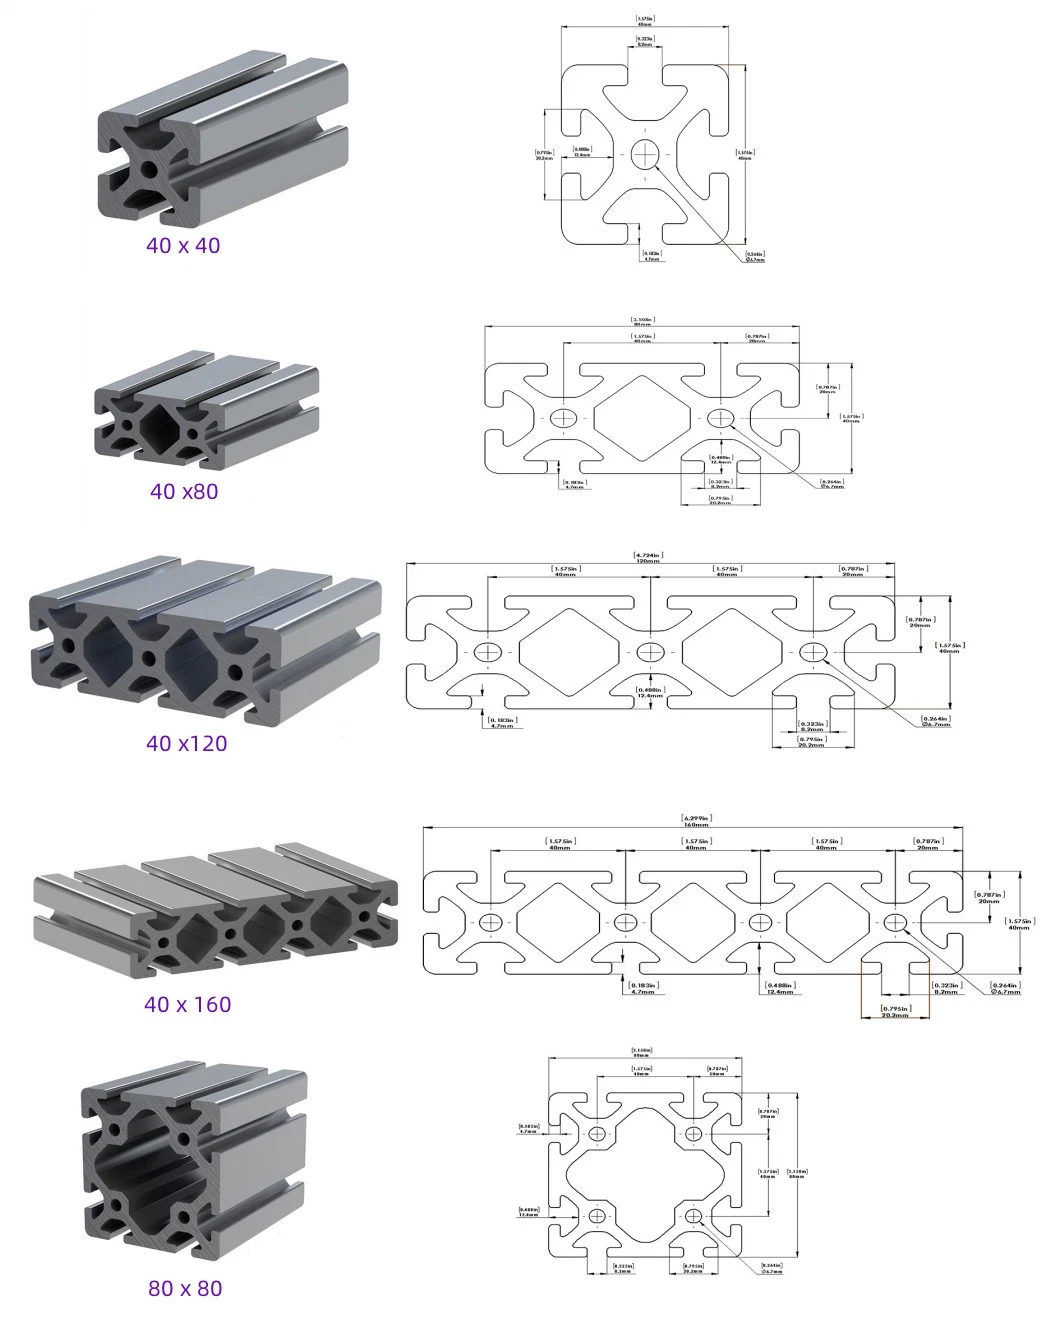 T-Slot Machine Bases Construction Assembly Line 6063 T6 Aluminium Frame Components